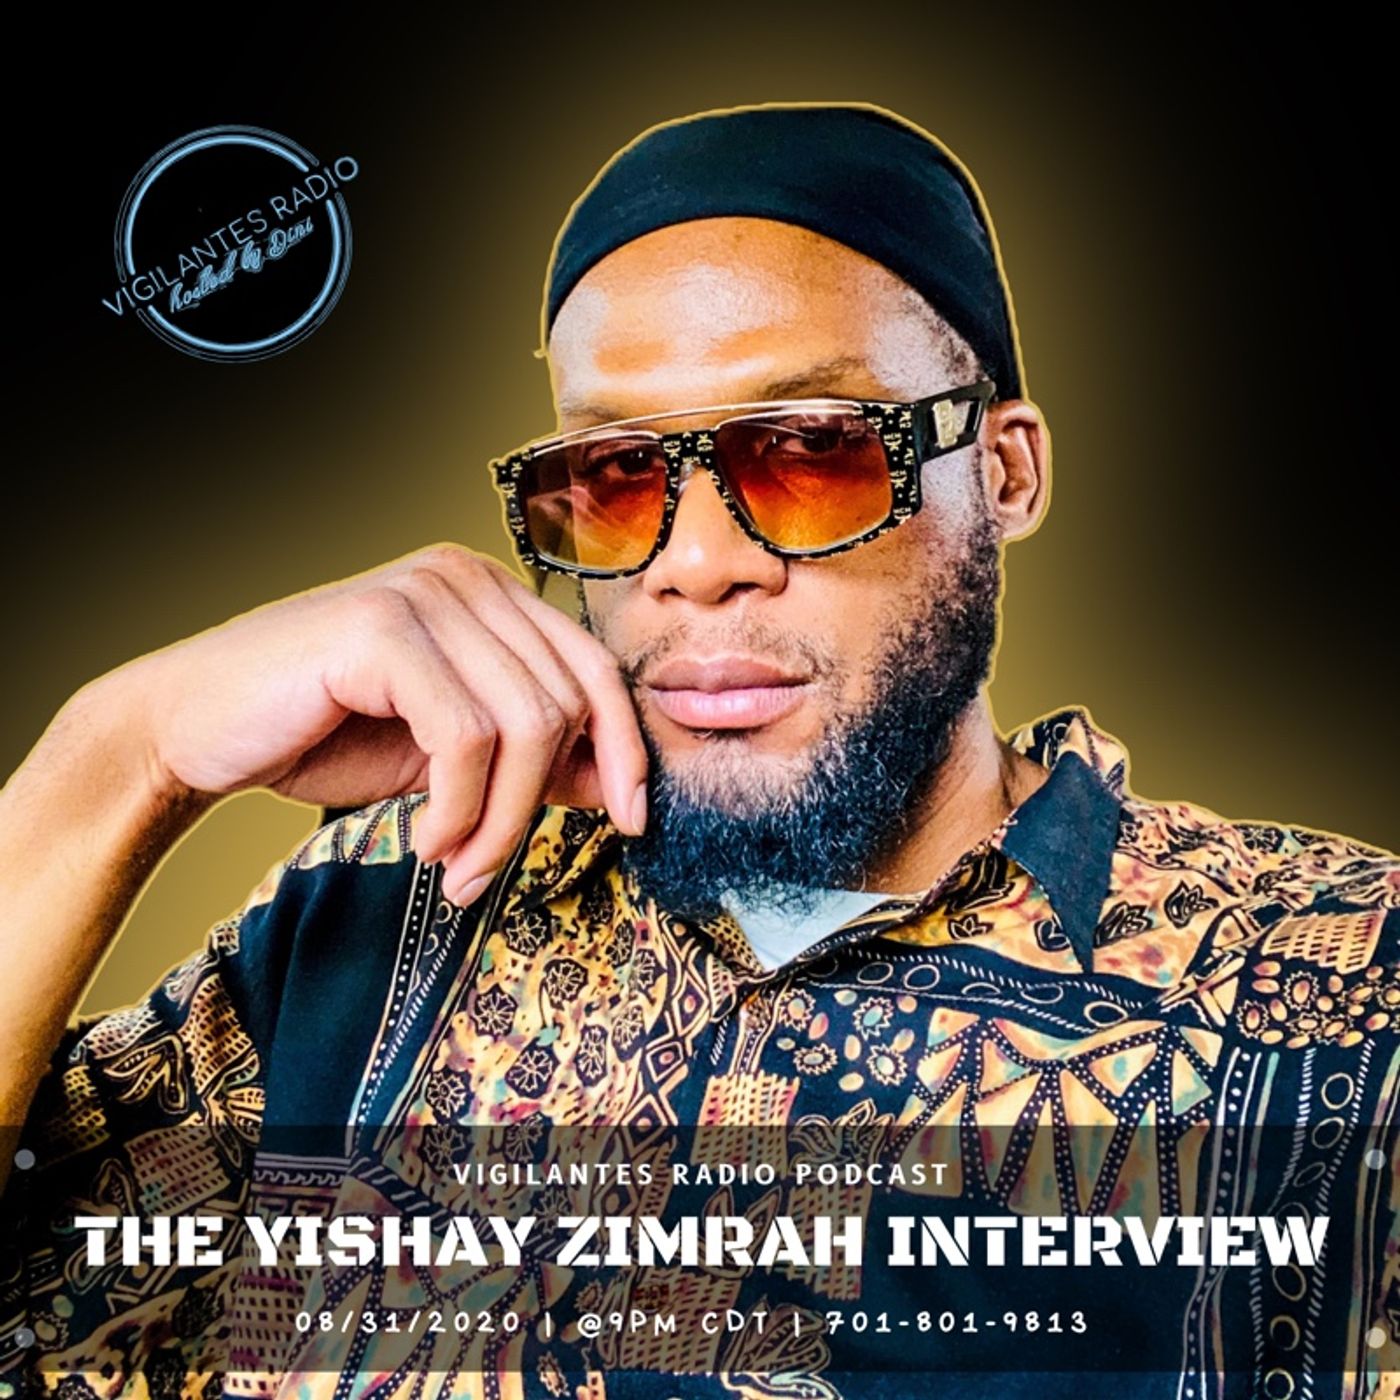 The Yishay Zimrah Interview.